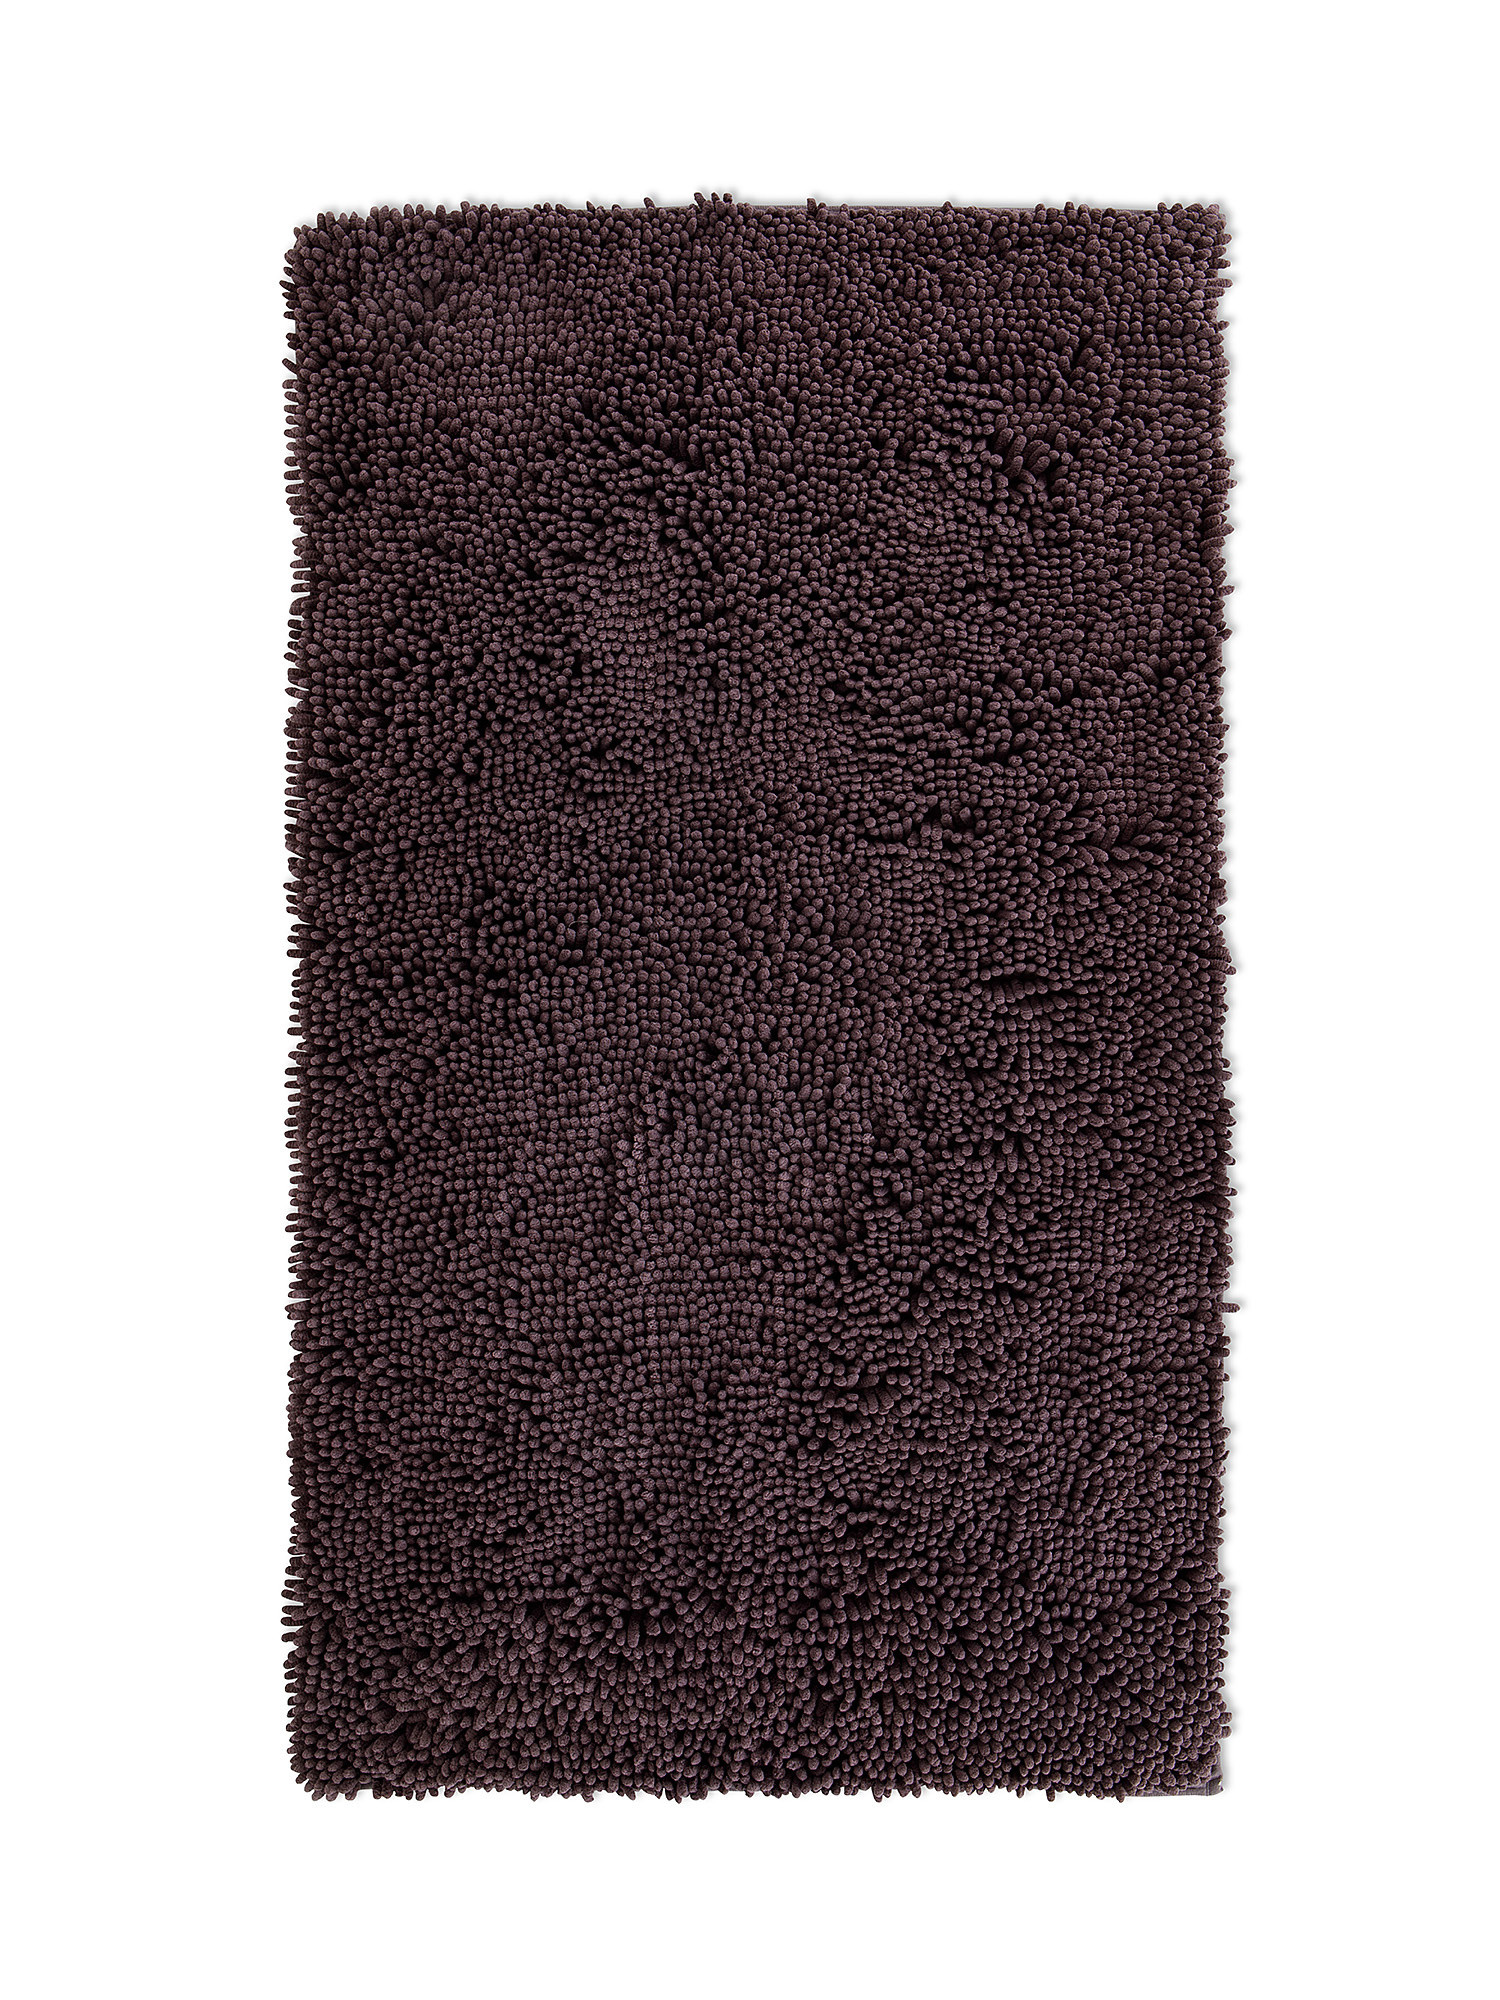 Zefiro Gold shaggy micro fleece bath mat, Anthracite, large image number 0